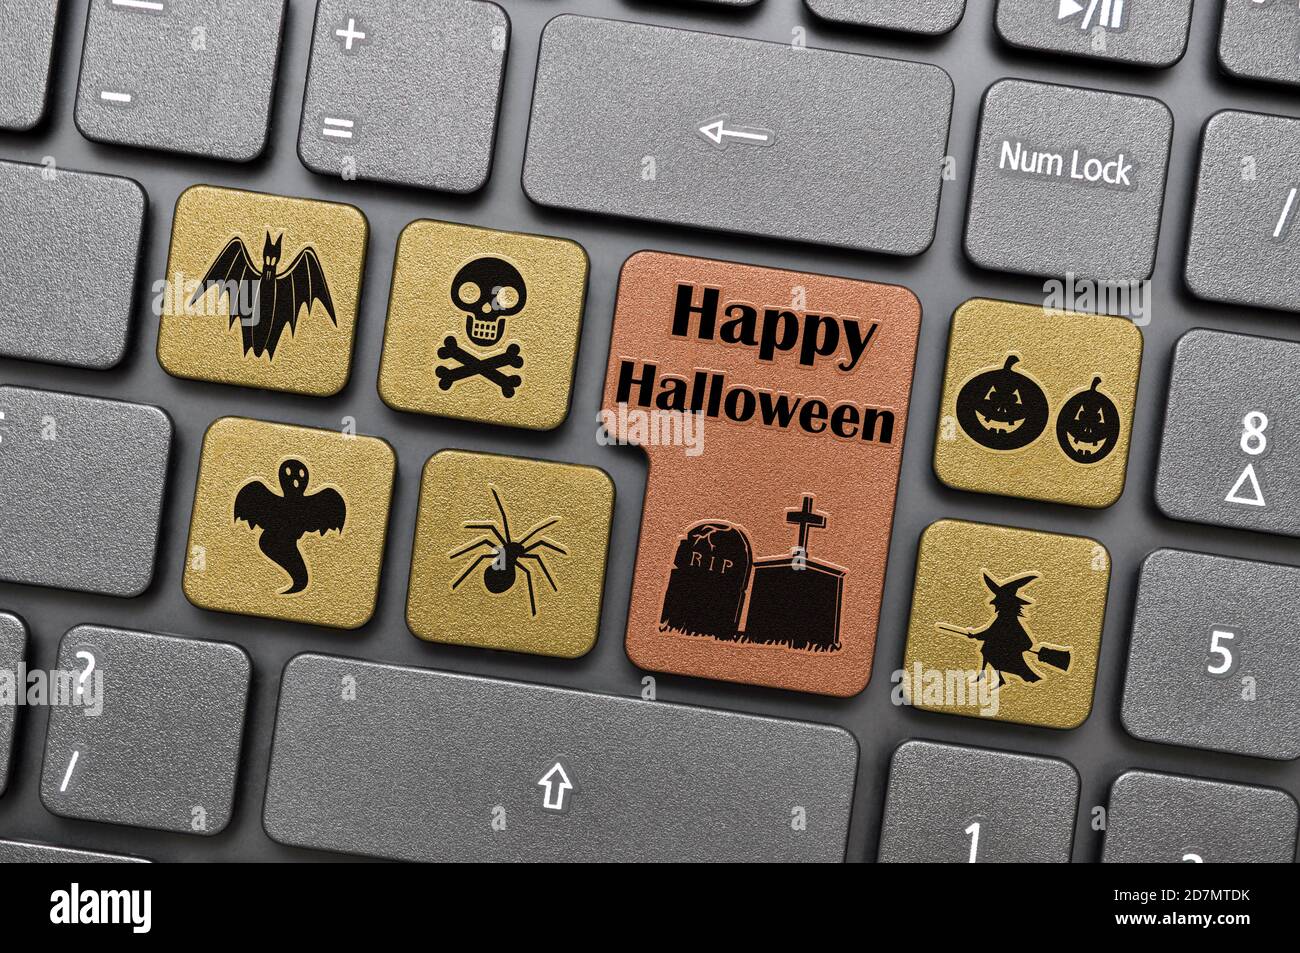 Happy Halloween key on keyboard Stock Photo